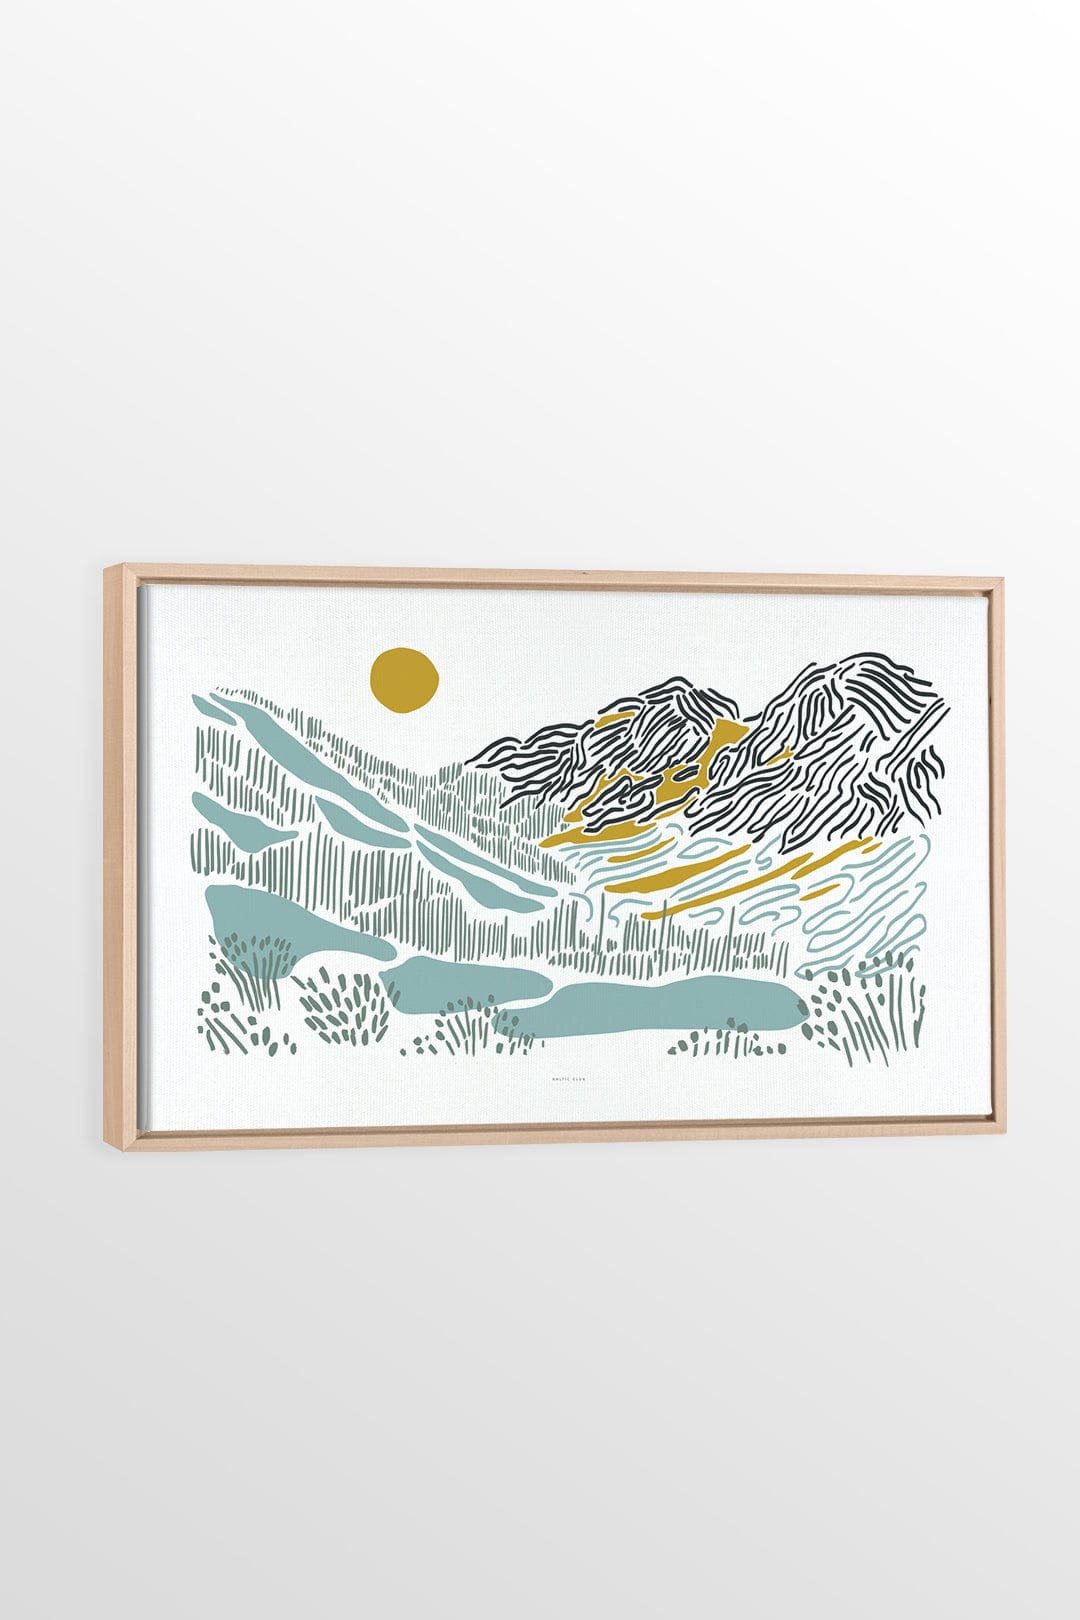 Cascades Mountain - Printed illustration on canvas